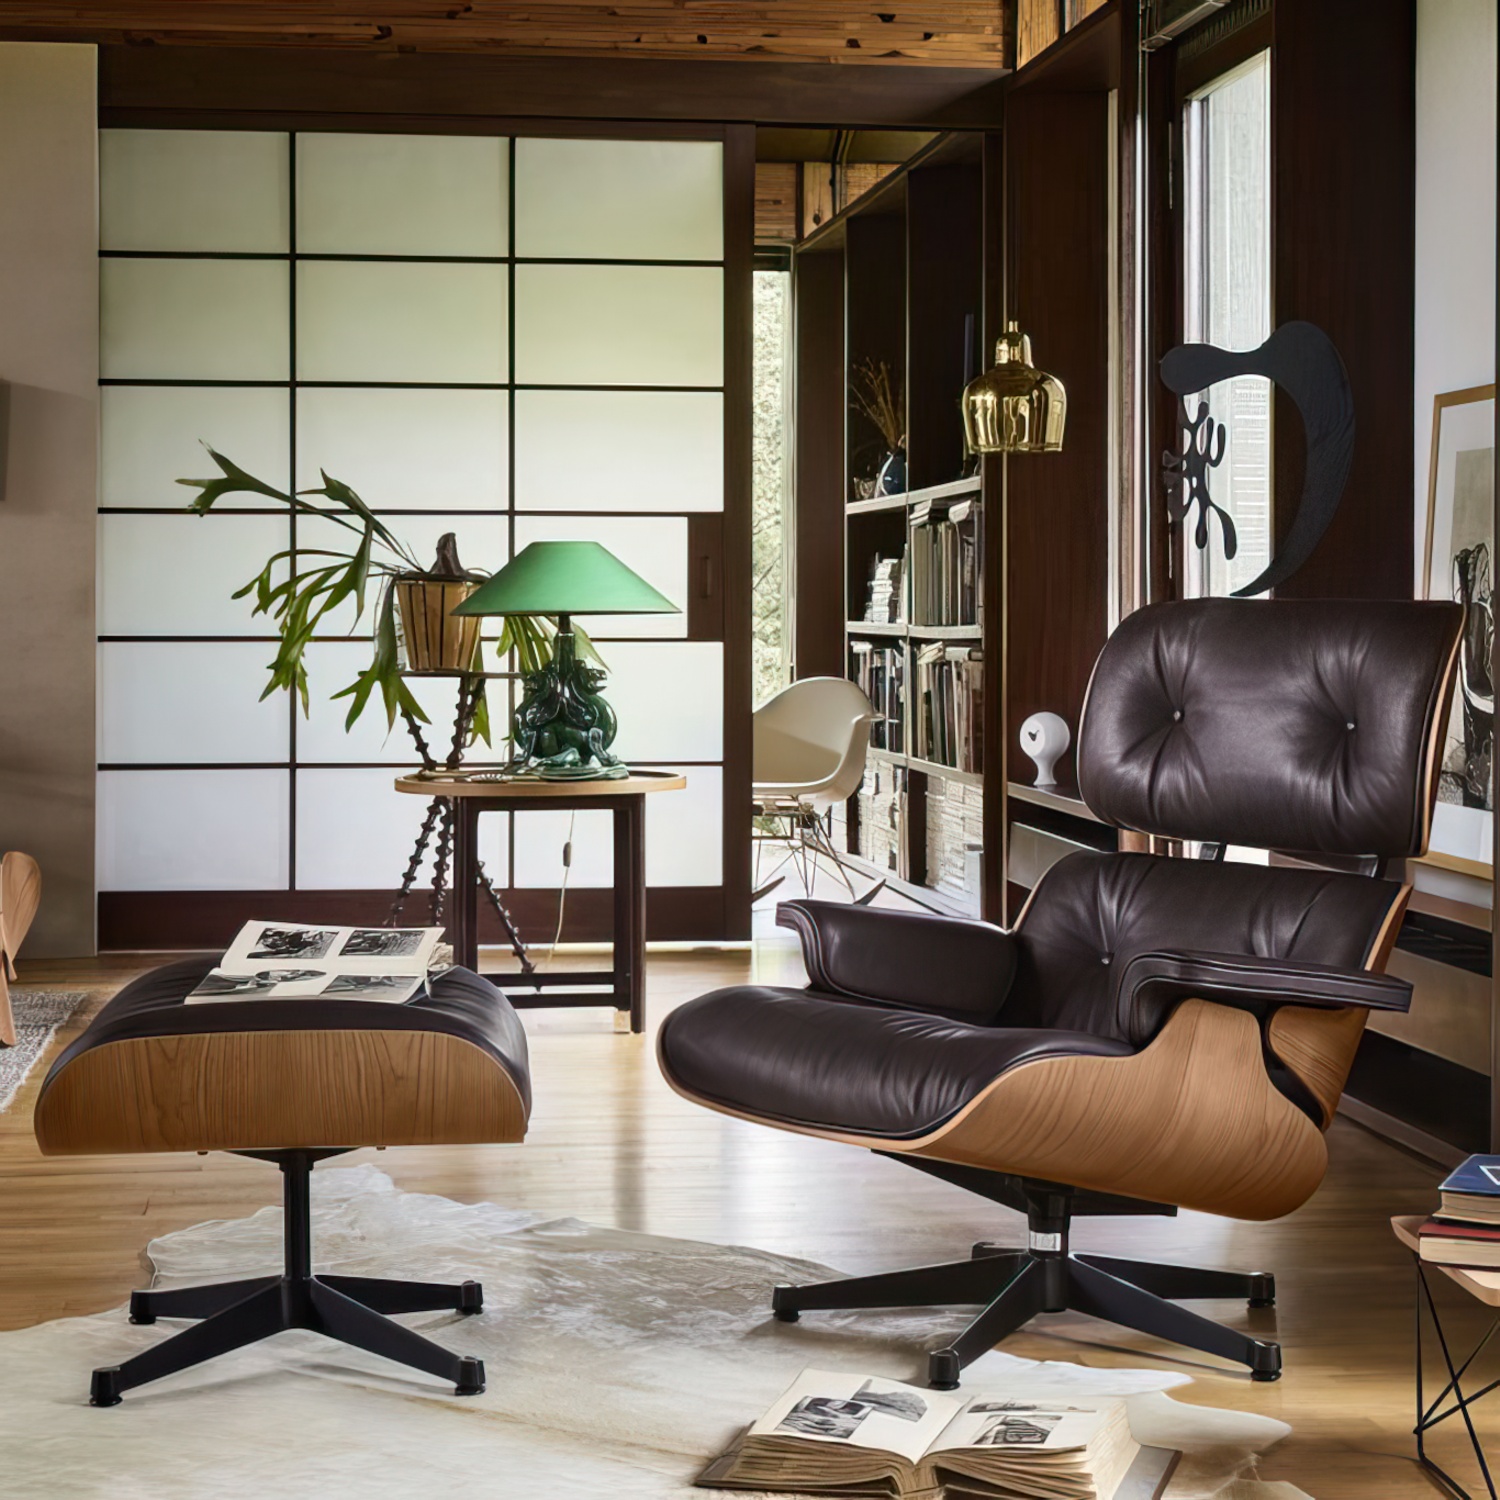 Lounge Chair and Ottoman 41212200 Santos Palisander Leder Premium Farbe Pflaume Gestell Aluminium poliert